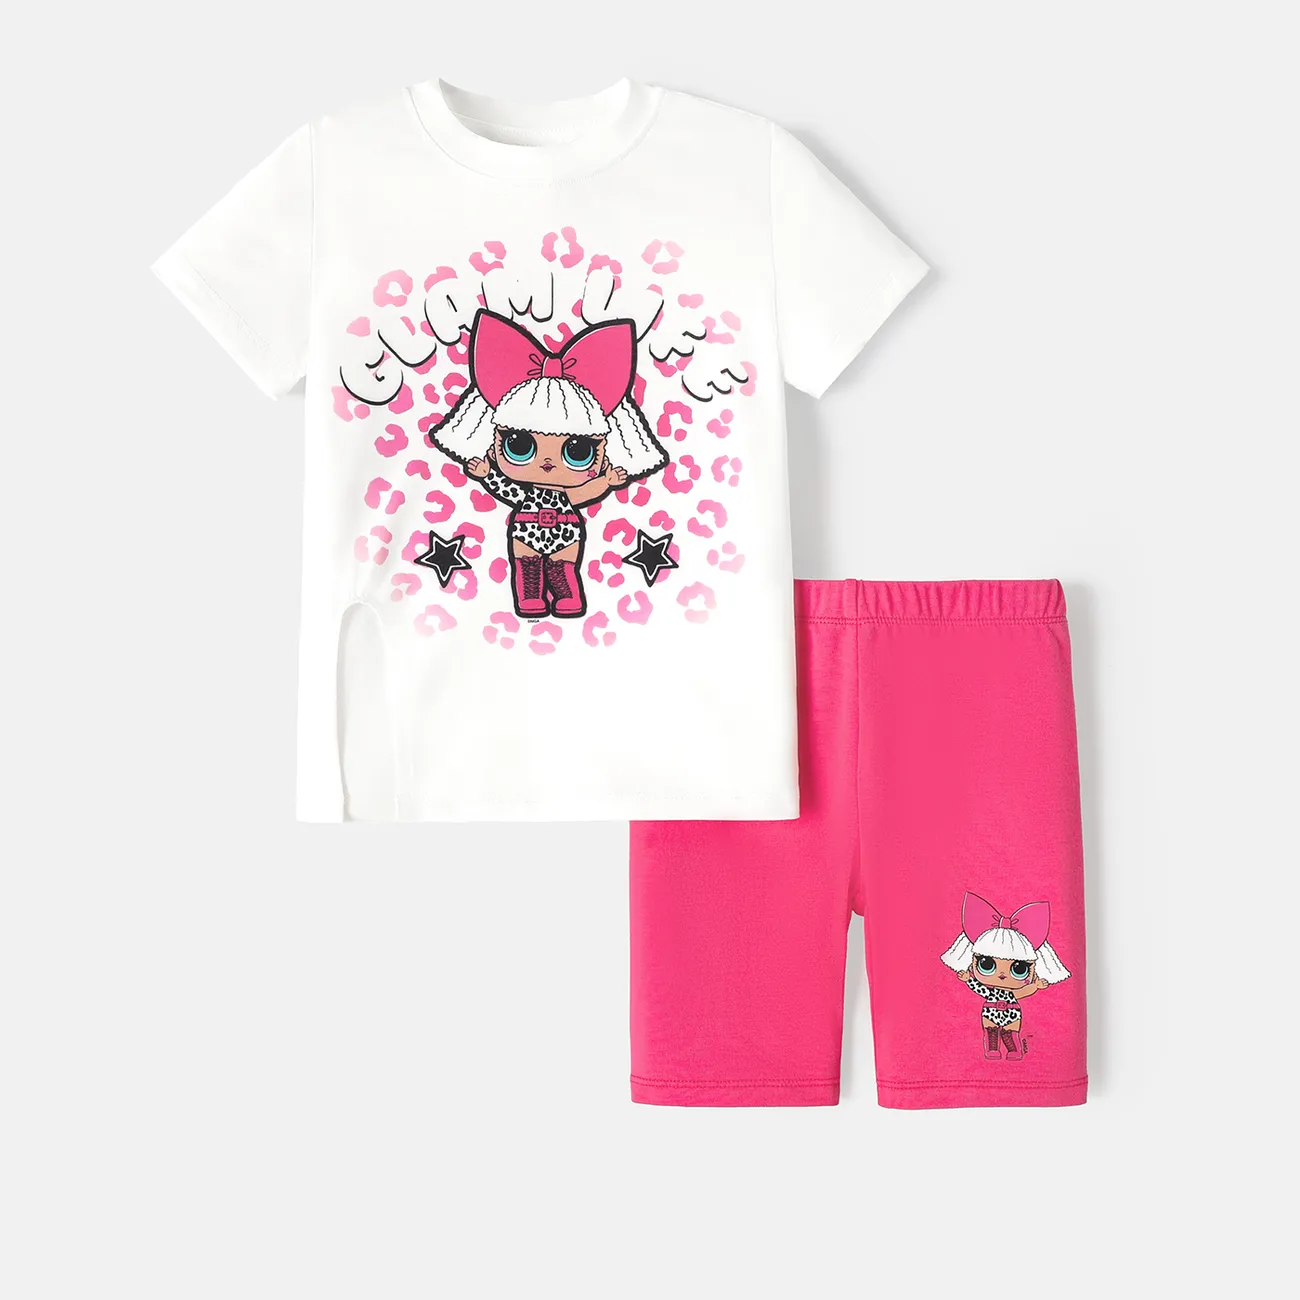 L.O.L. SURPRISE! Toddler/Kid Girl/Boy Character Print Tee and Cotton Shorts Set PINK-1 big image 1